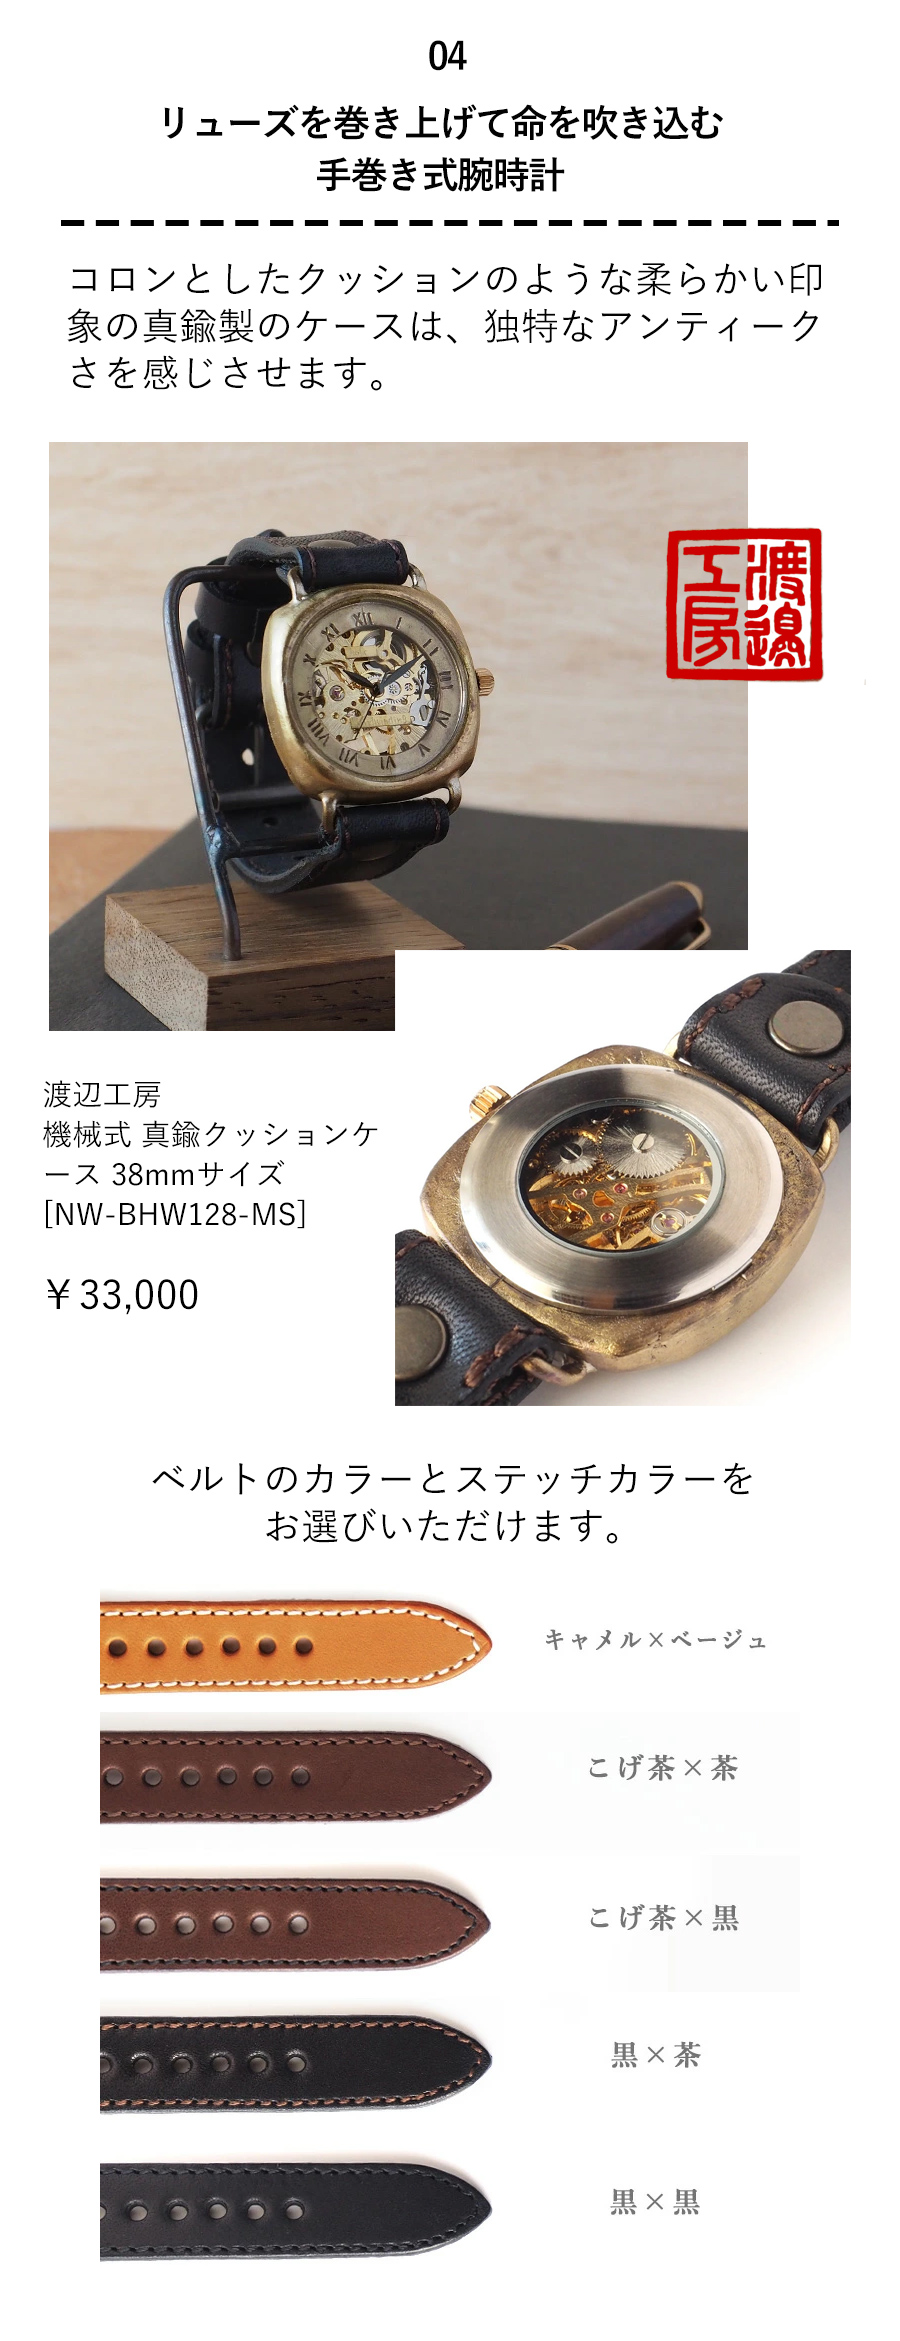 Watanabe Kobo Handmade Wristwatch Mechanical Manual Winding Watch Brass Cushion Case Roman Numerals 38mm Size